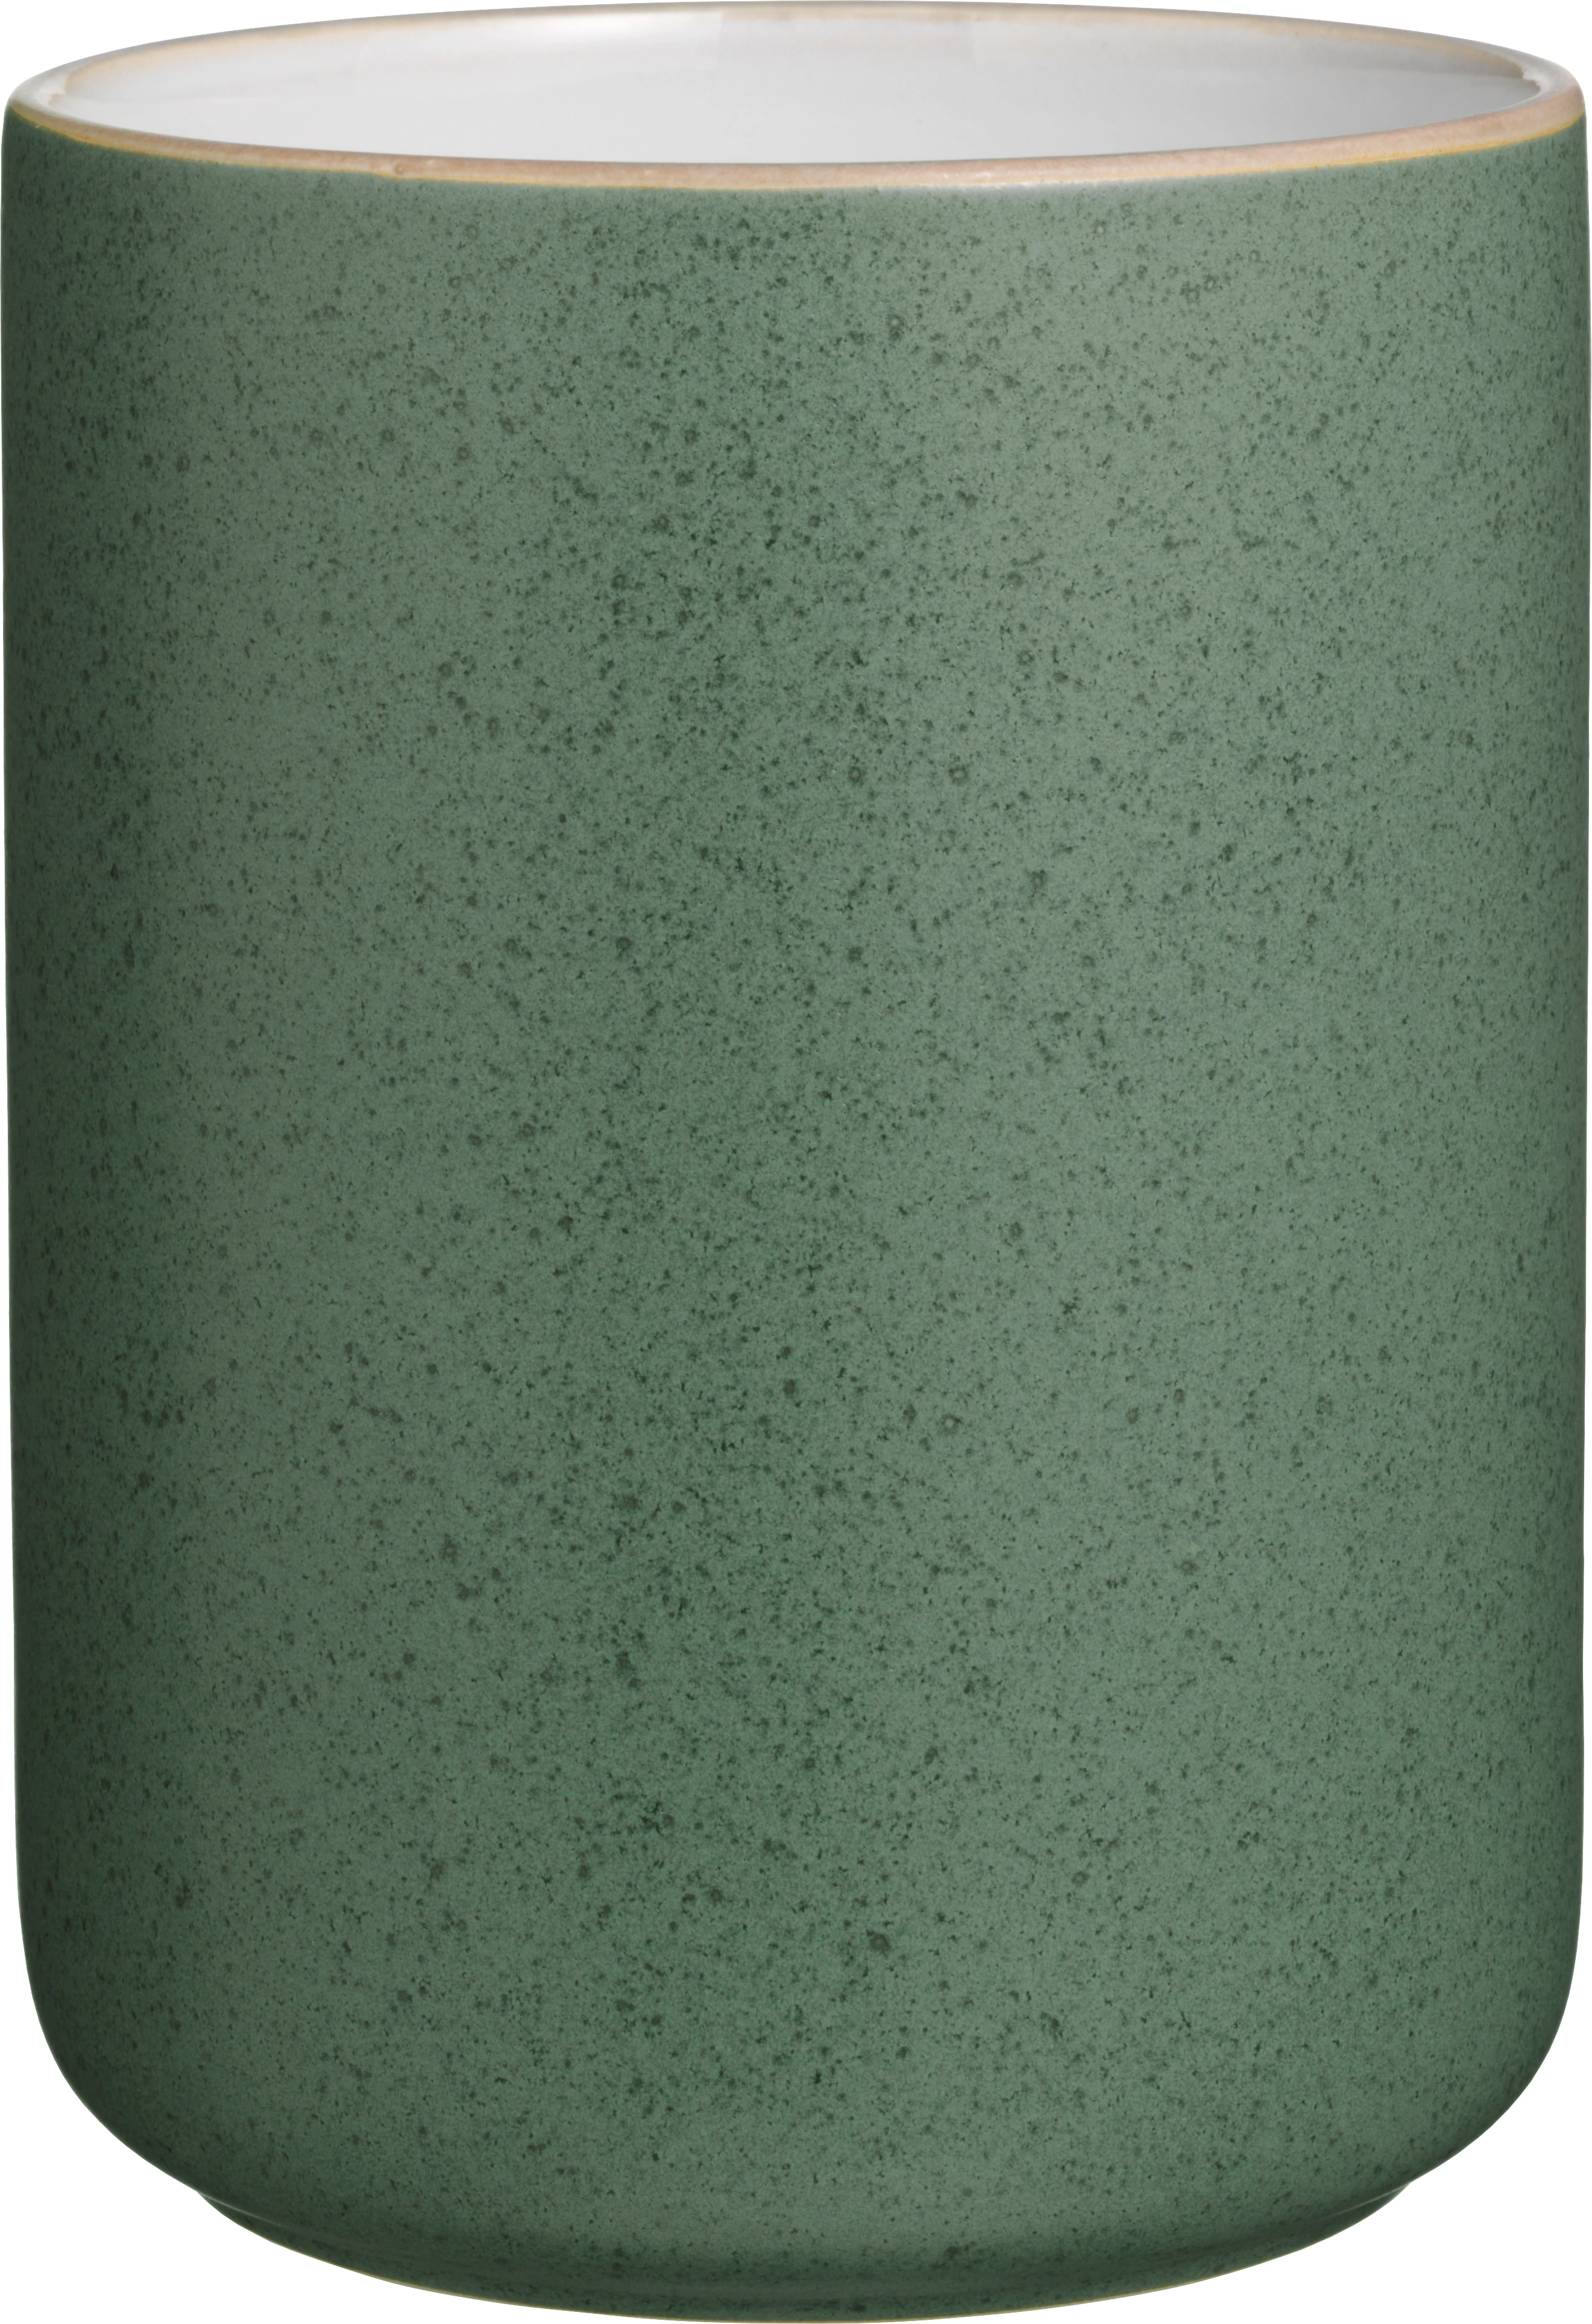 Skyline krukke, grøn, 1,75 ltr., ø13,6 cm